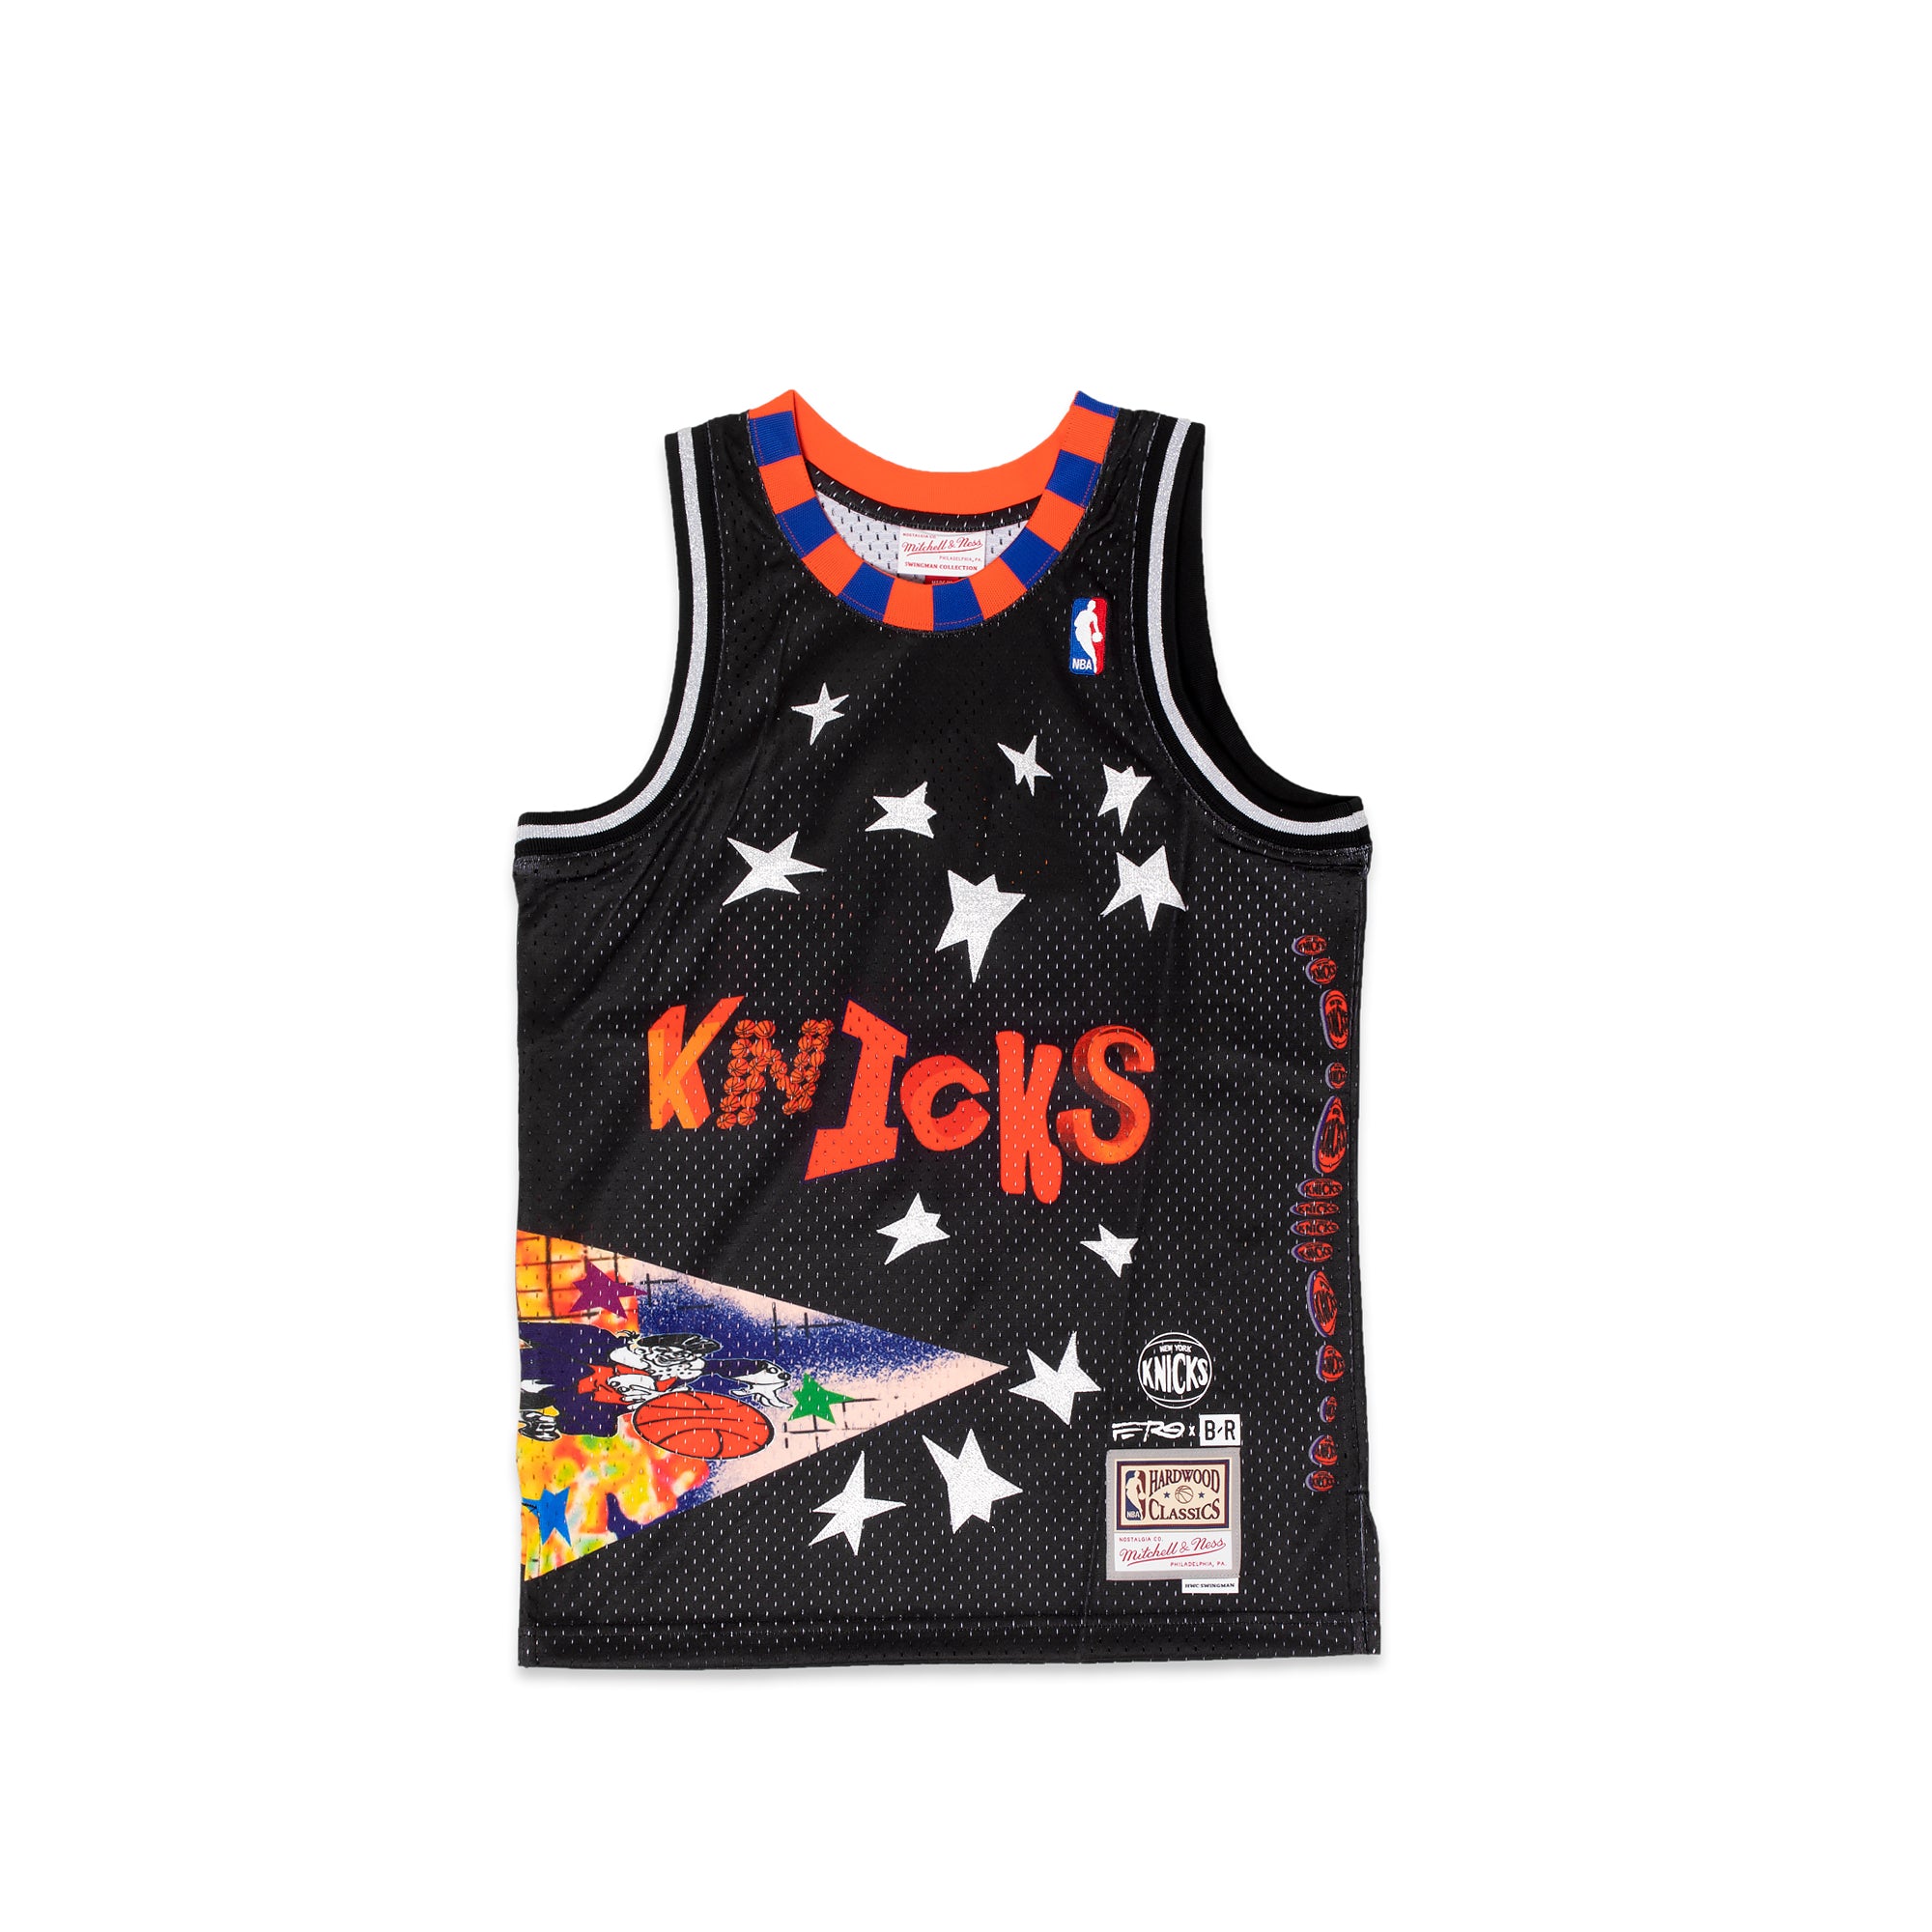 Mitchell & Ness A$AP Ferg x New York Knicks Swingman Jersey Black